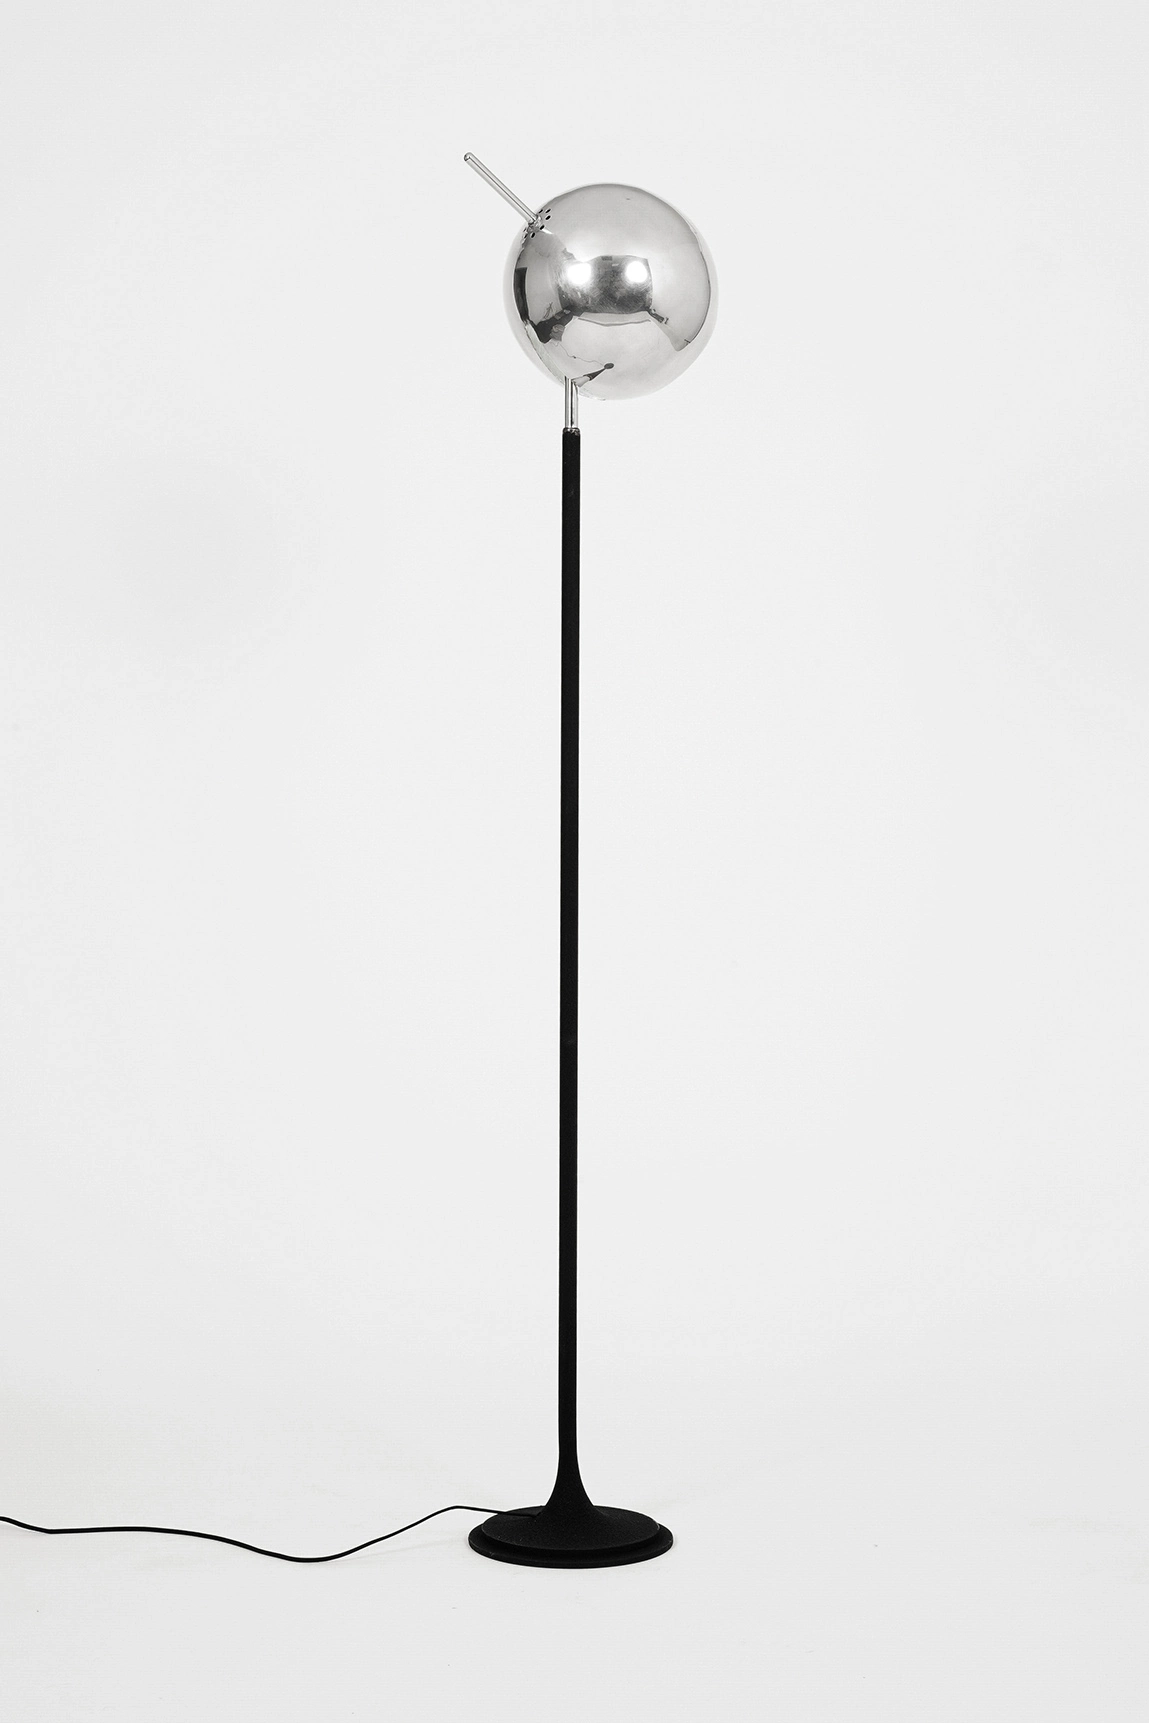 1082 - Gino Sarfatti - Floor light - Galerie kreo